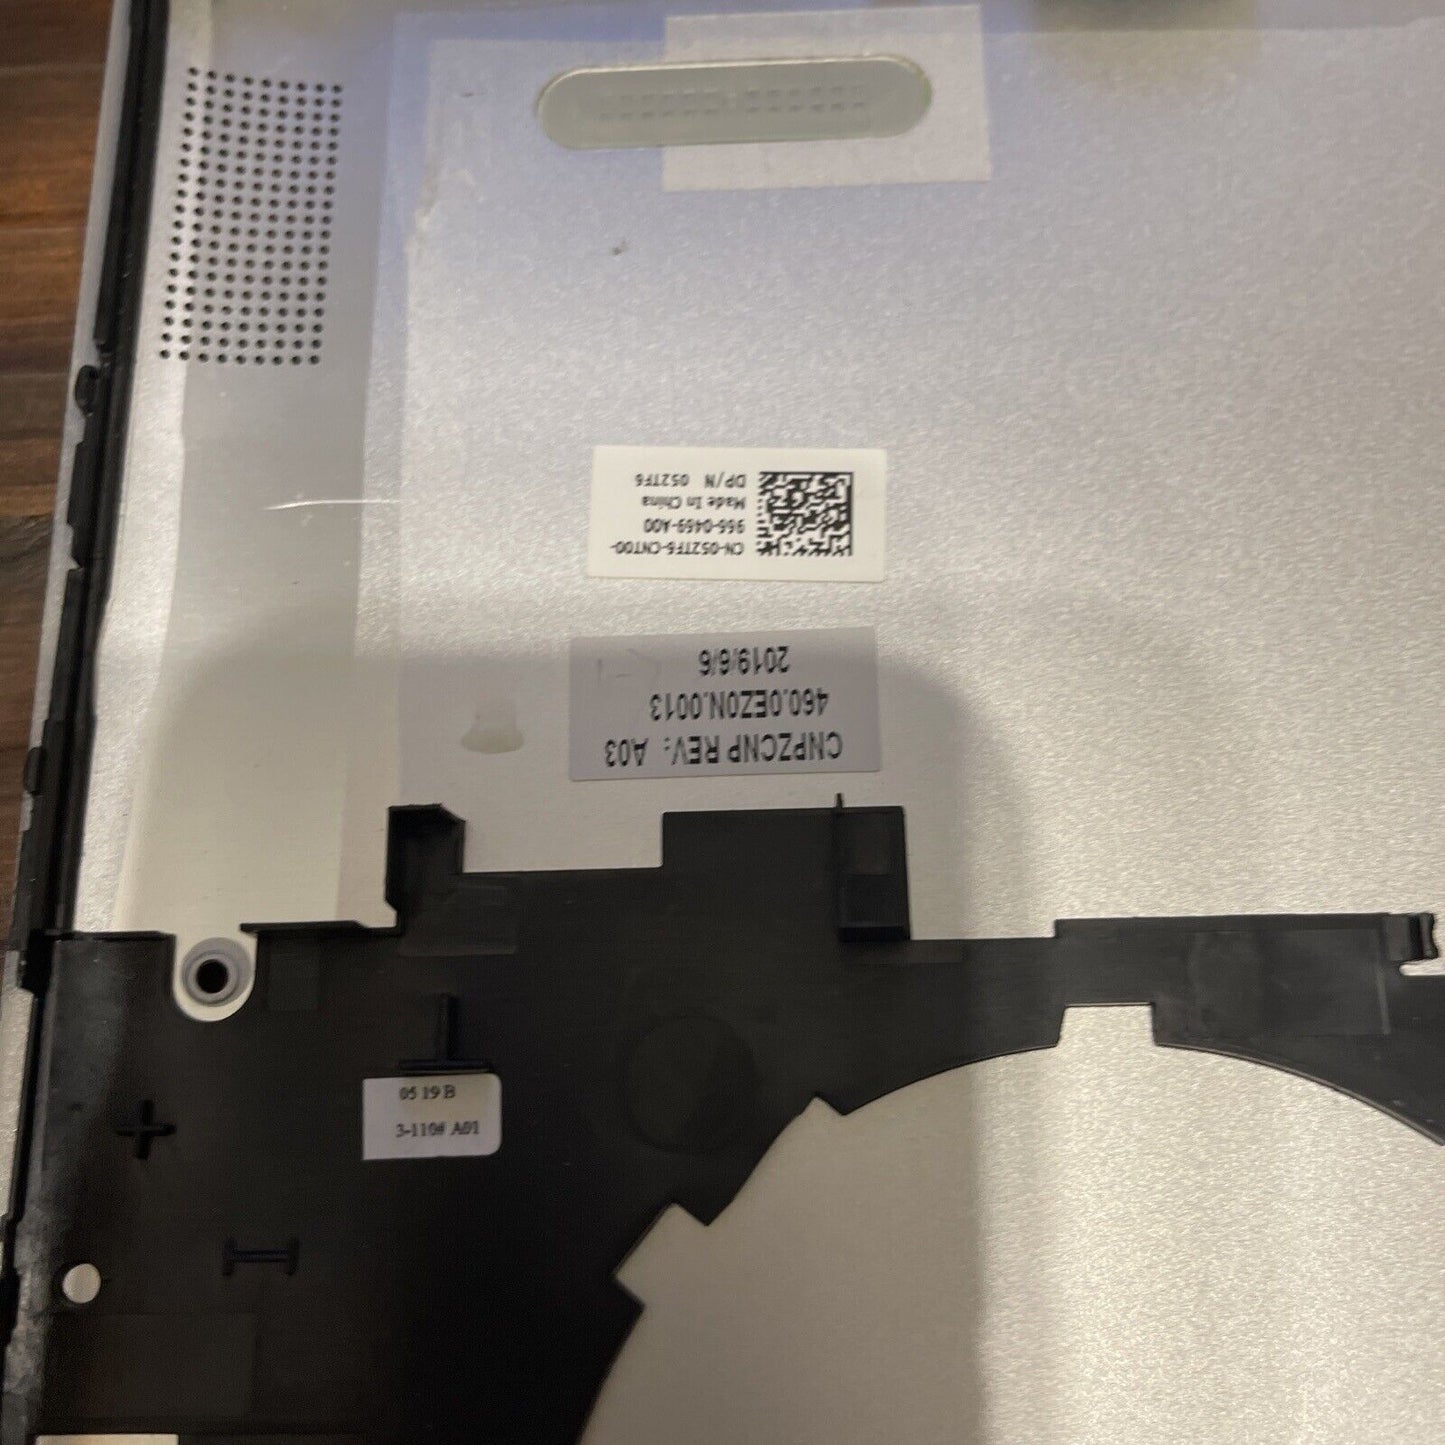 Genuine Dell Inspiron 7586 2-in-1 Laptop Bottom Base Case Cover 052TF6 52TF6 b3